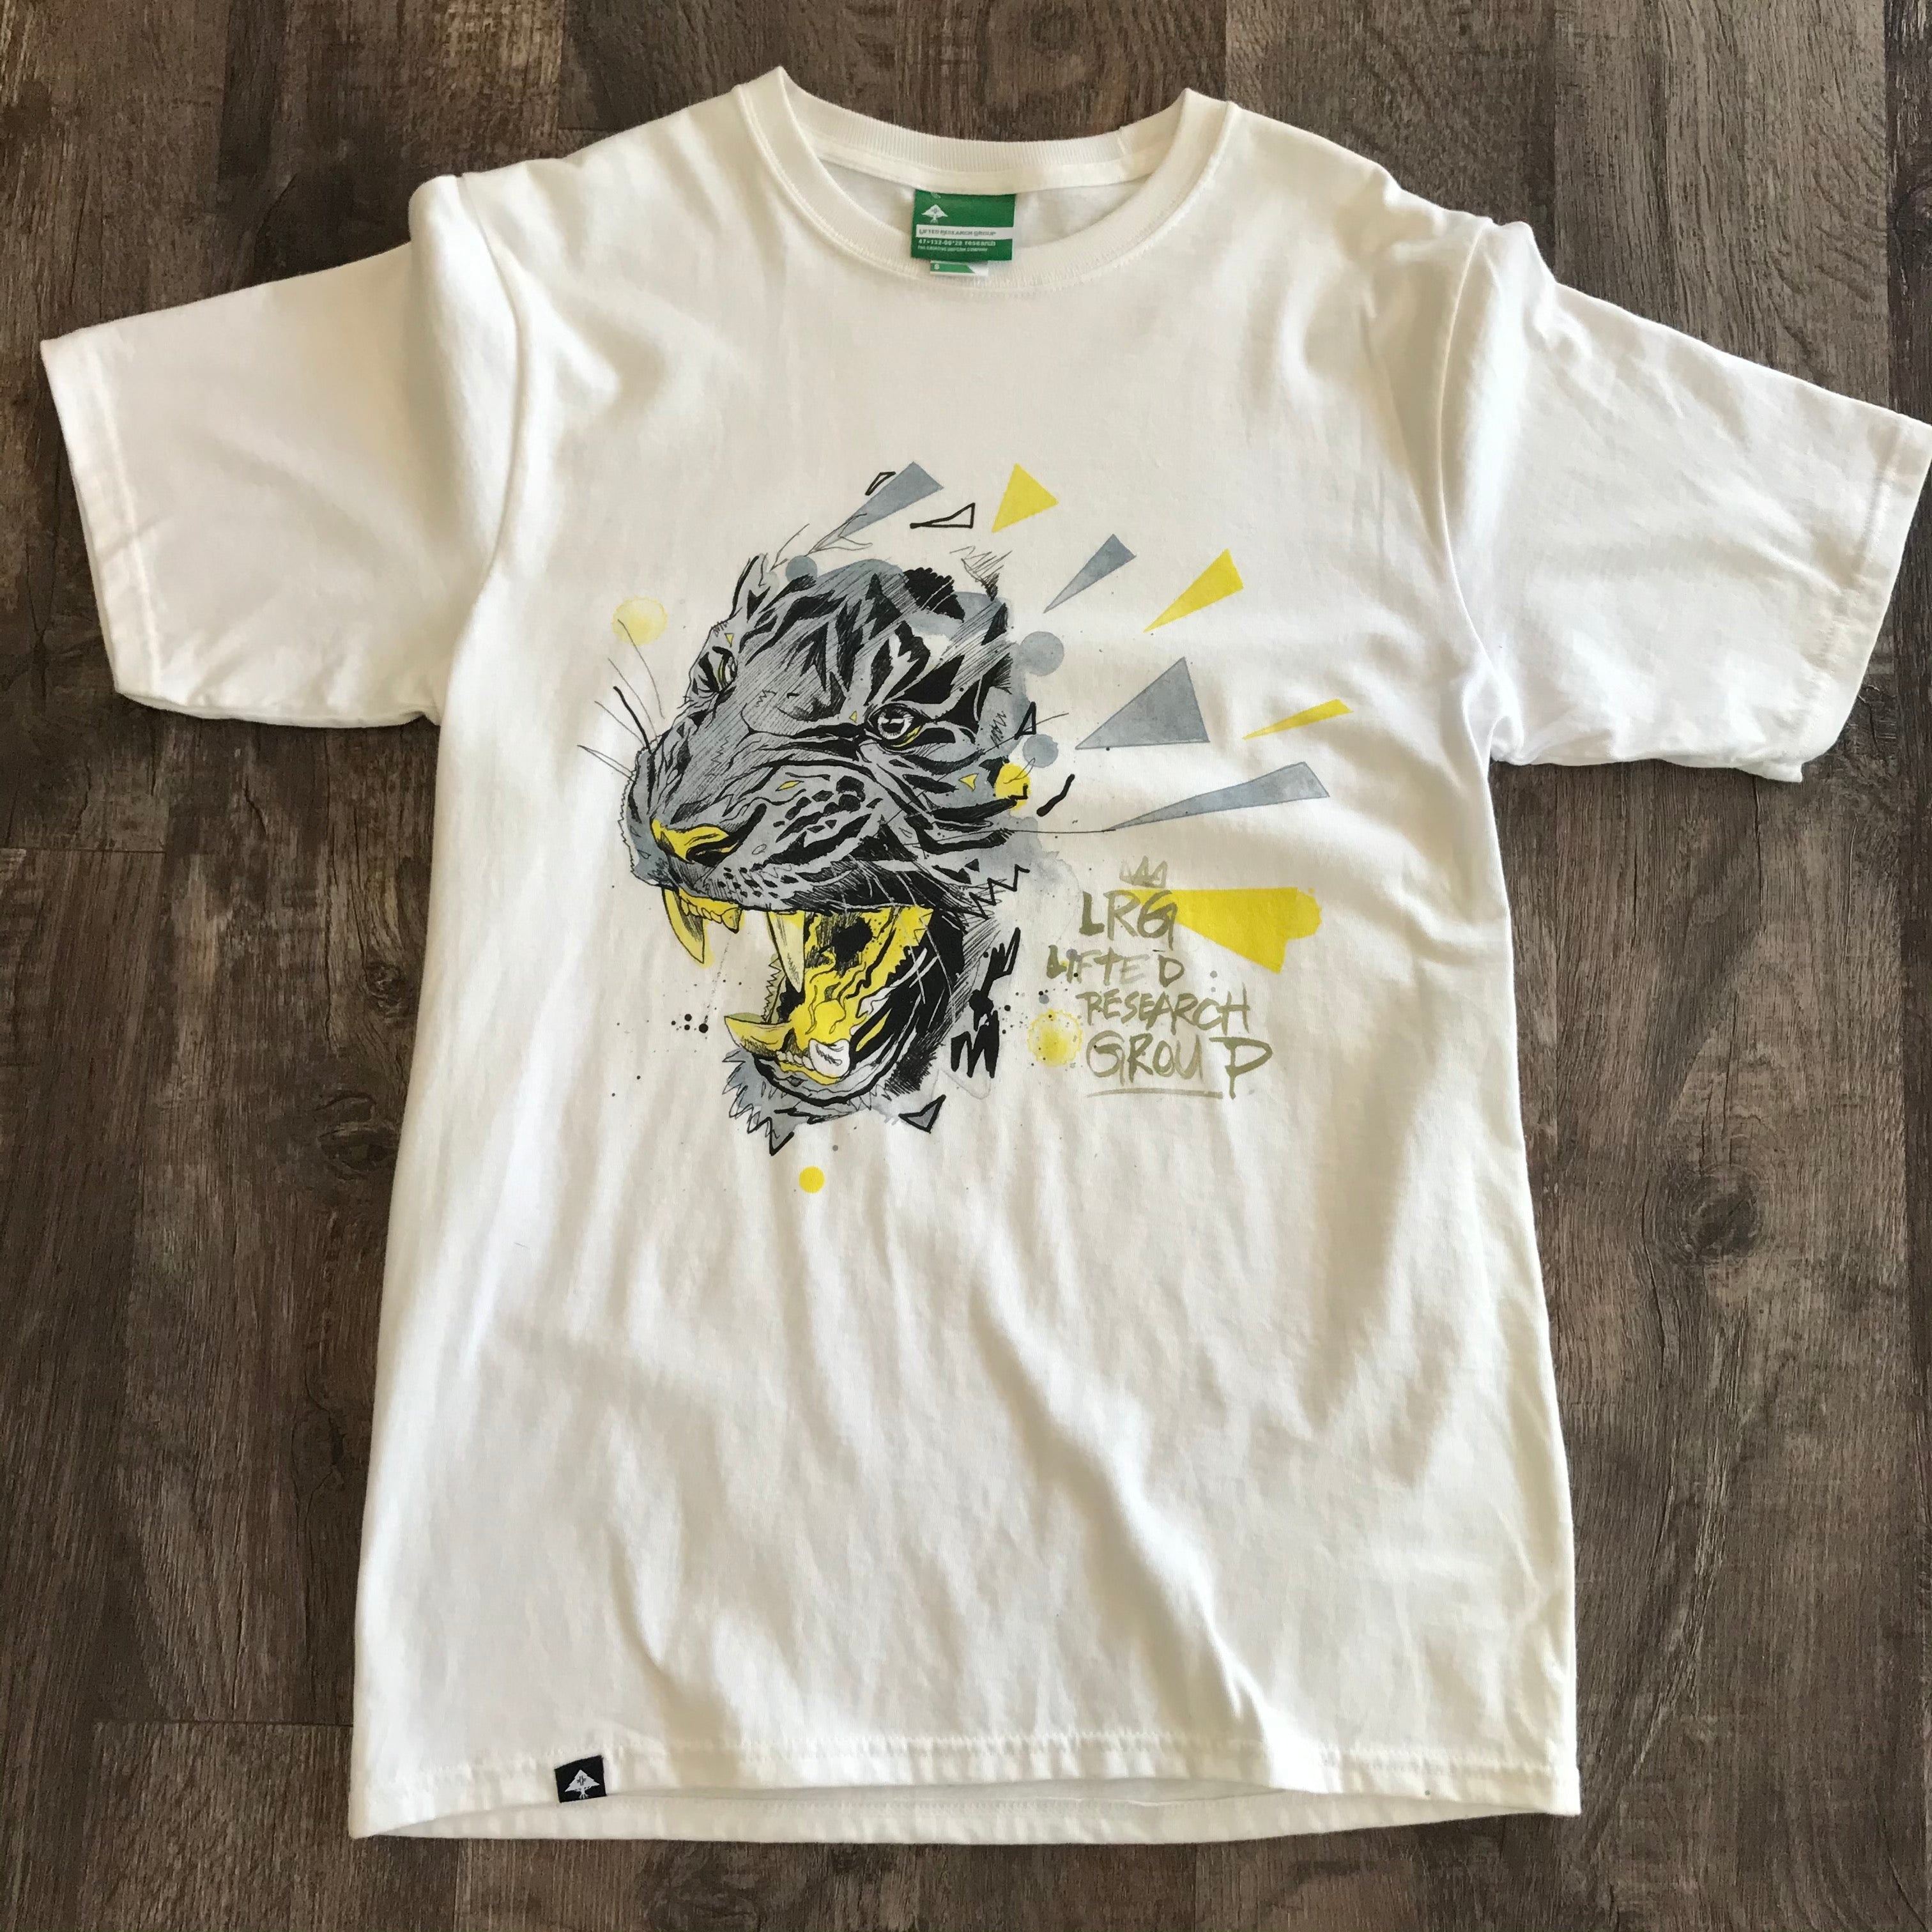 LRG Short Sleeve Shirt - Lion